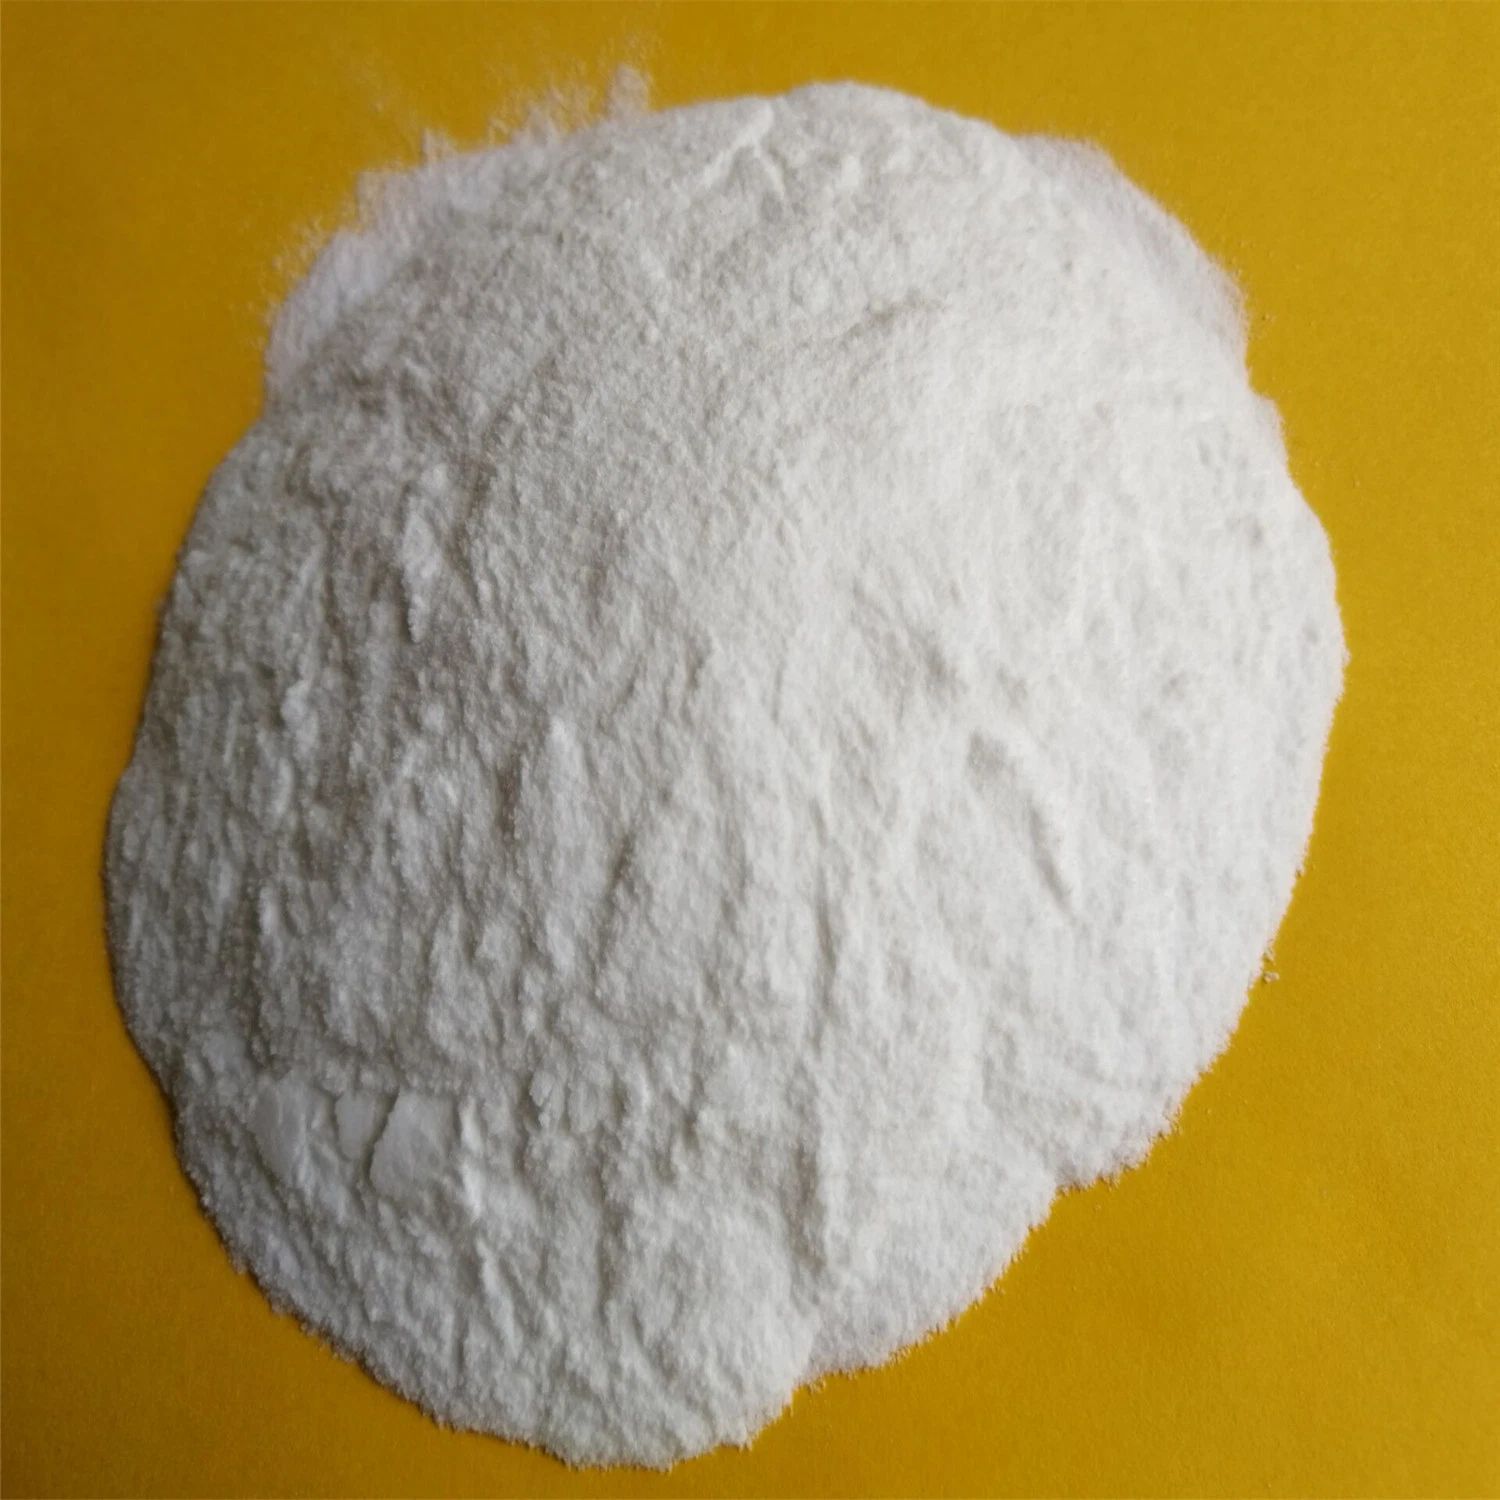 Sodium Bicarbonate Feed Additives for Animal Health